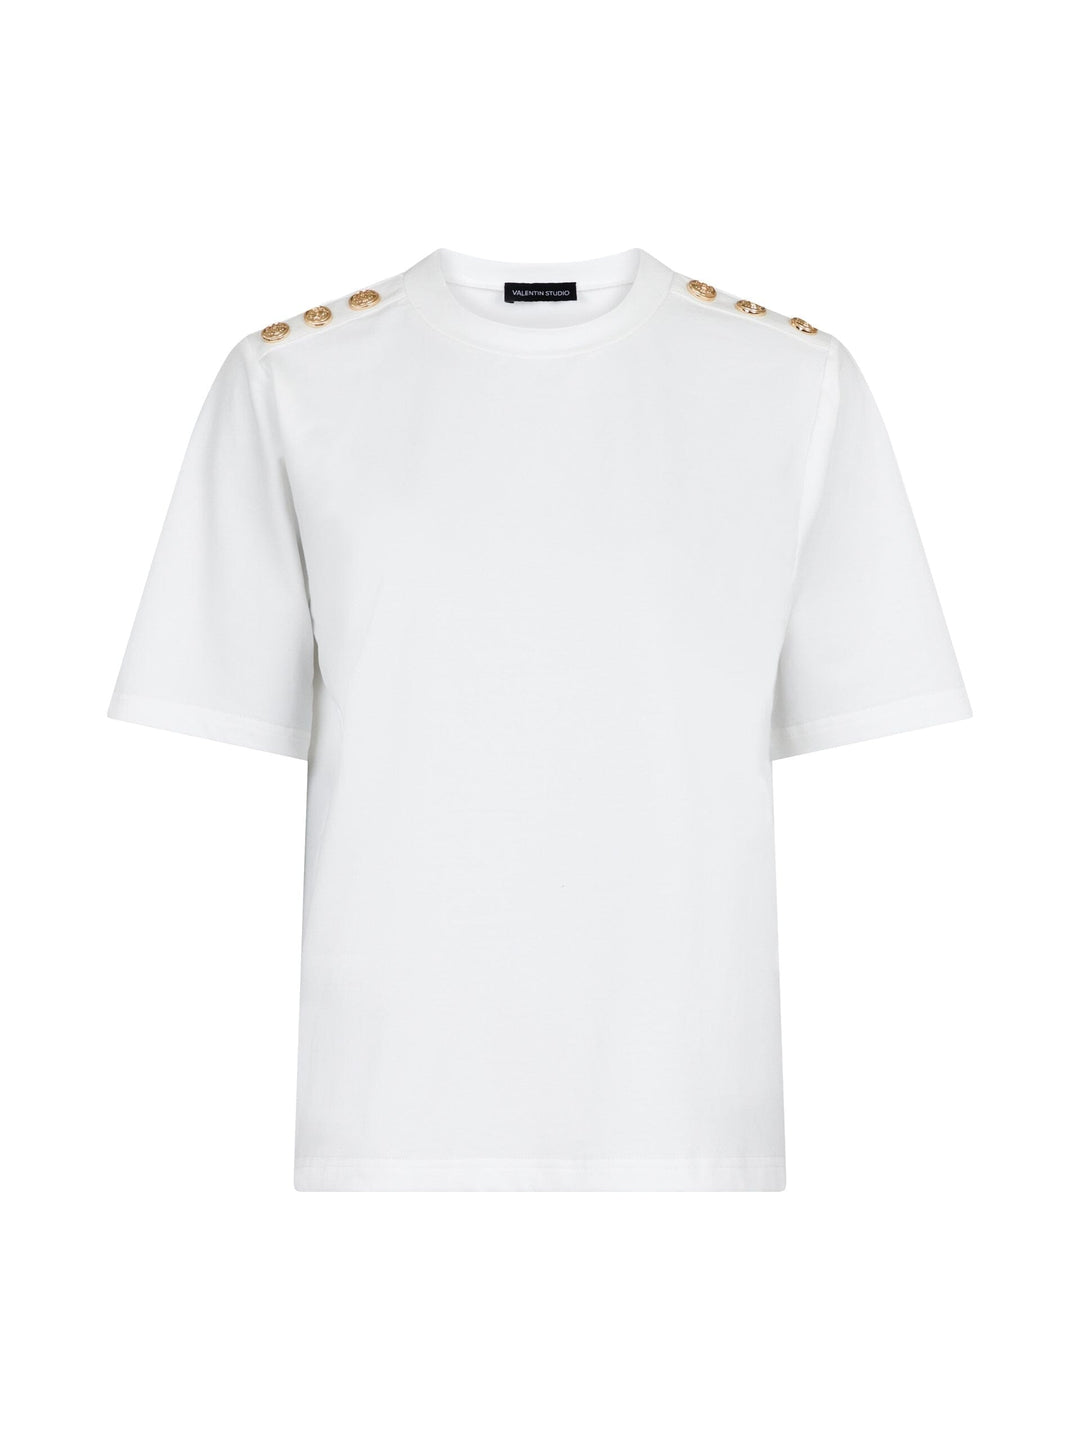 Valentin Studio - Gold Button Casual T-shirt - White T-shirts 